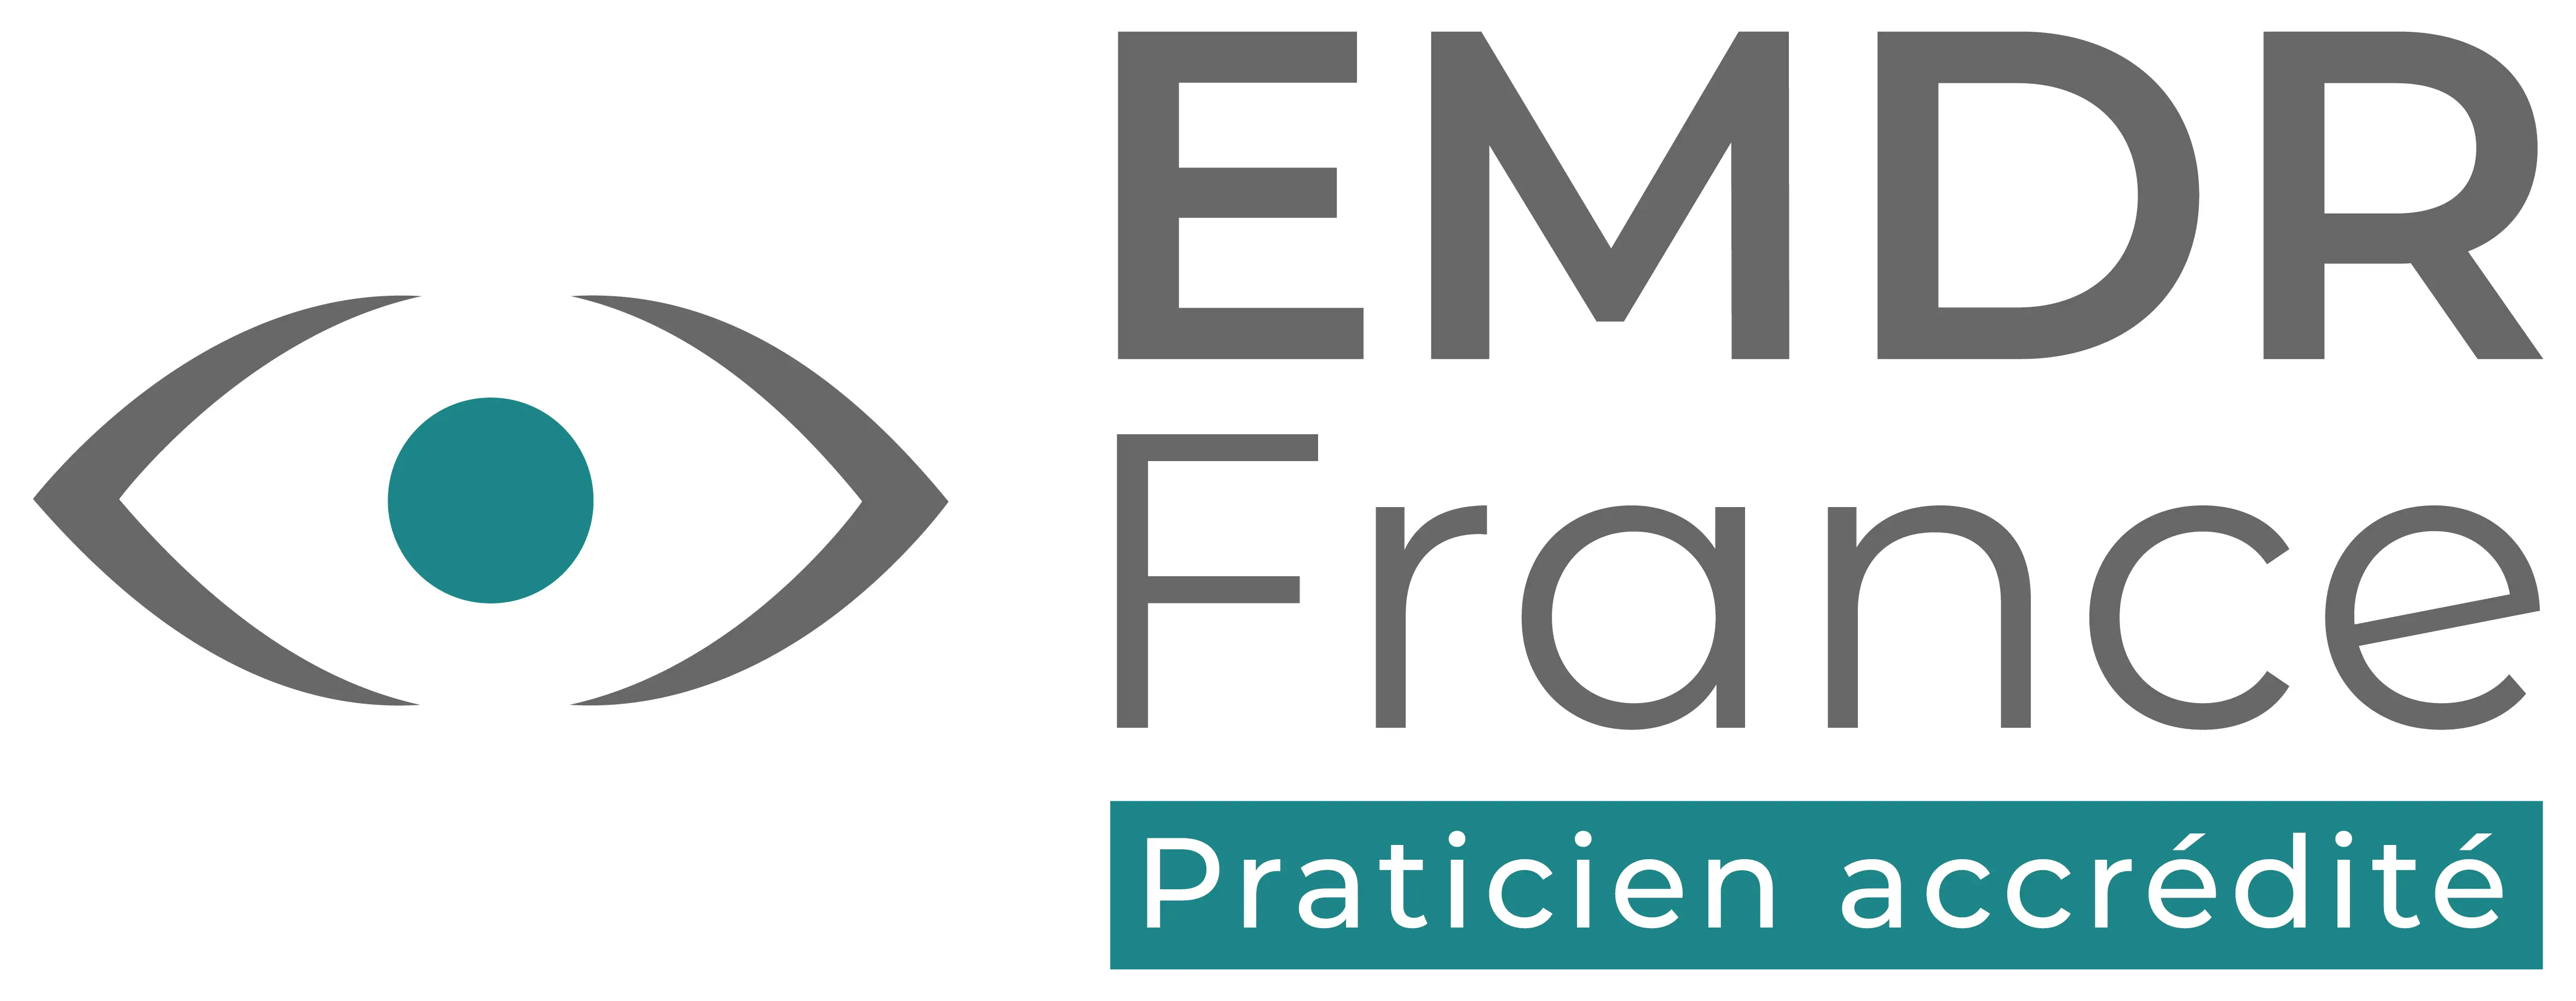 logo EMDR accrédité